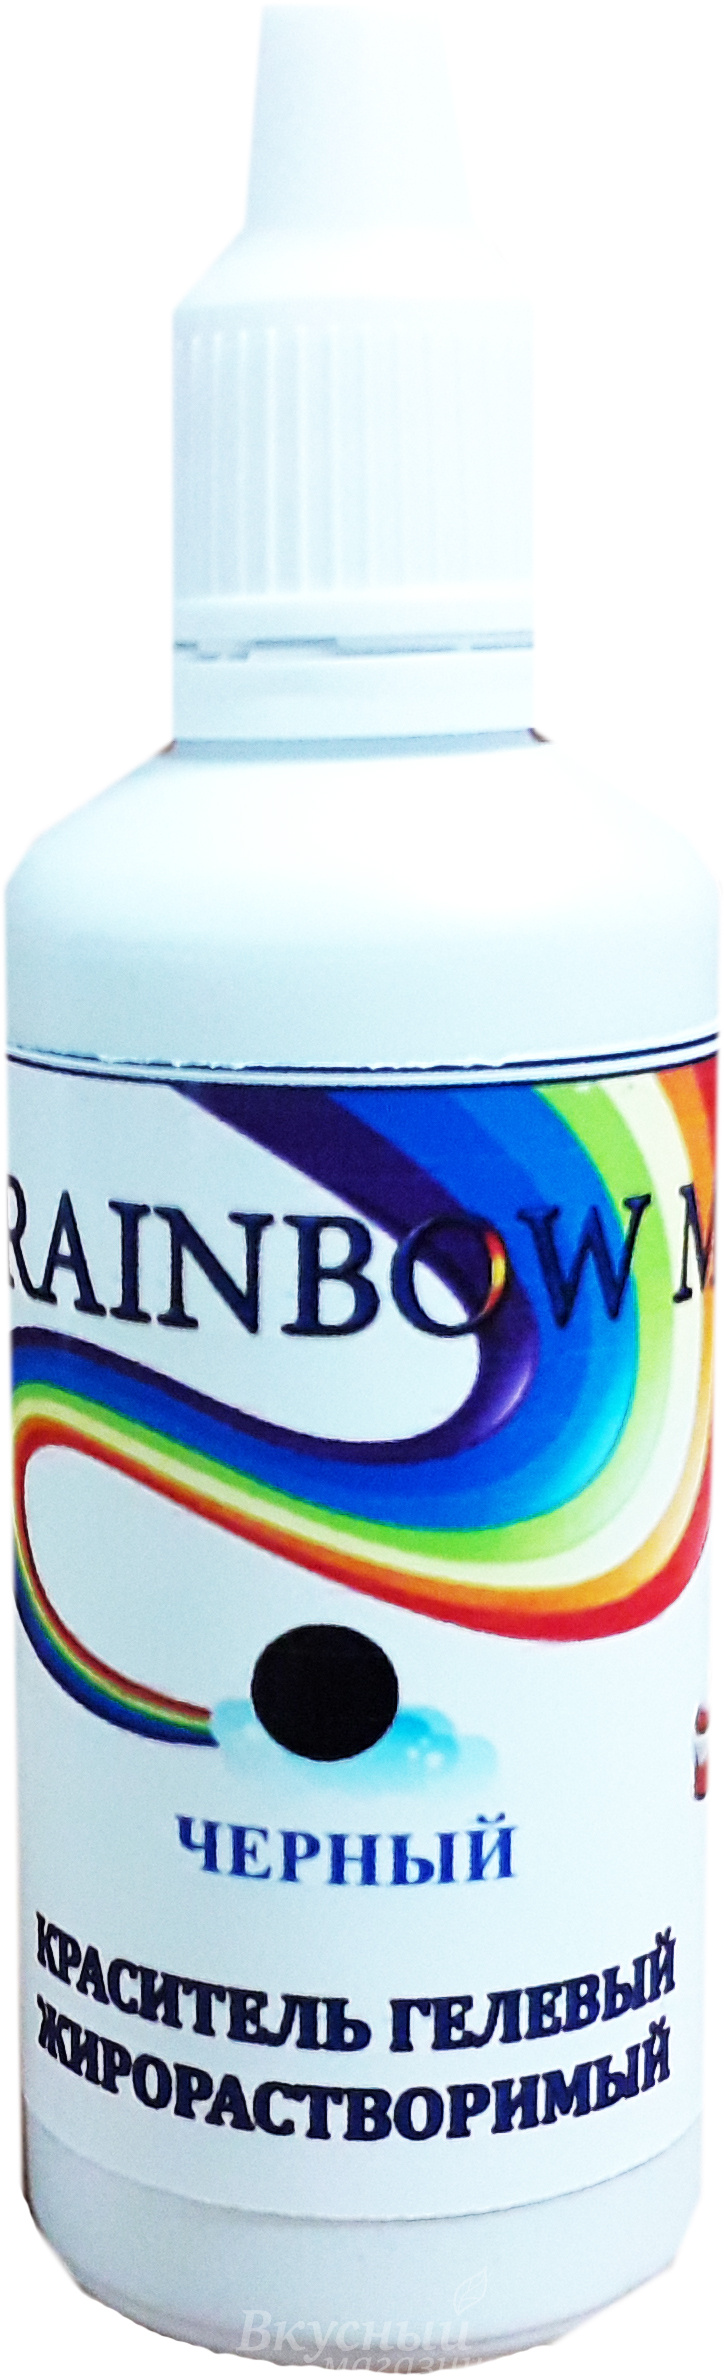 Краска гелевая Rainbow Man Черная жирорастворимая 40 гр